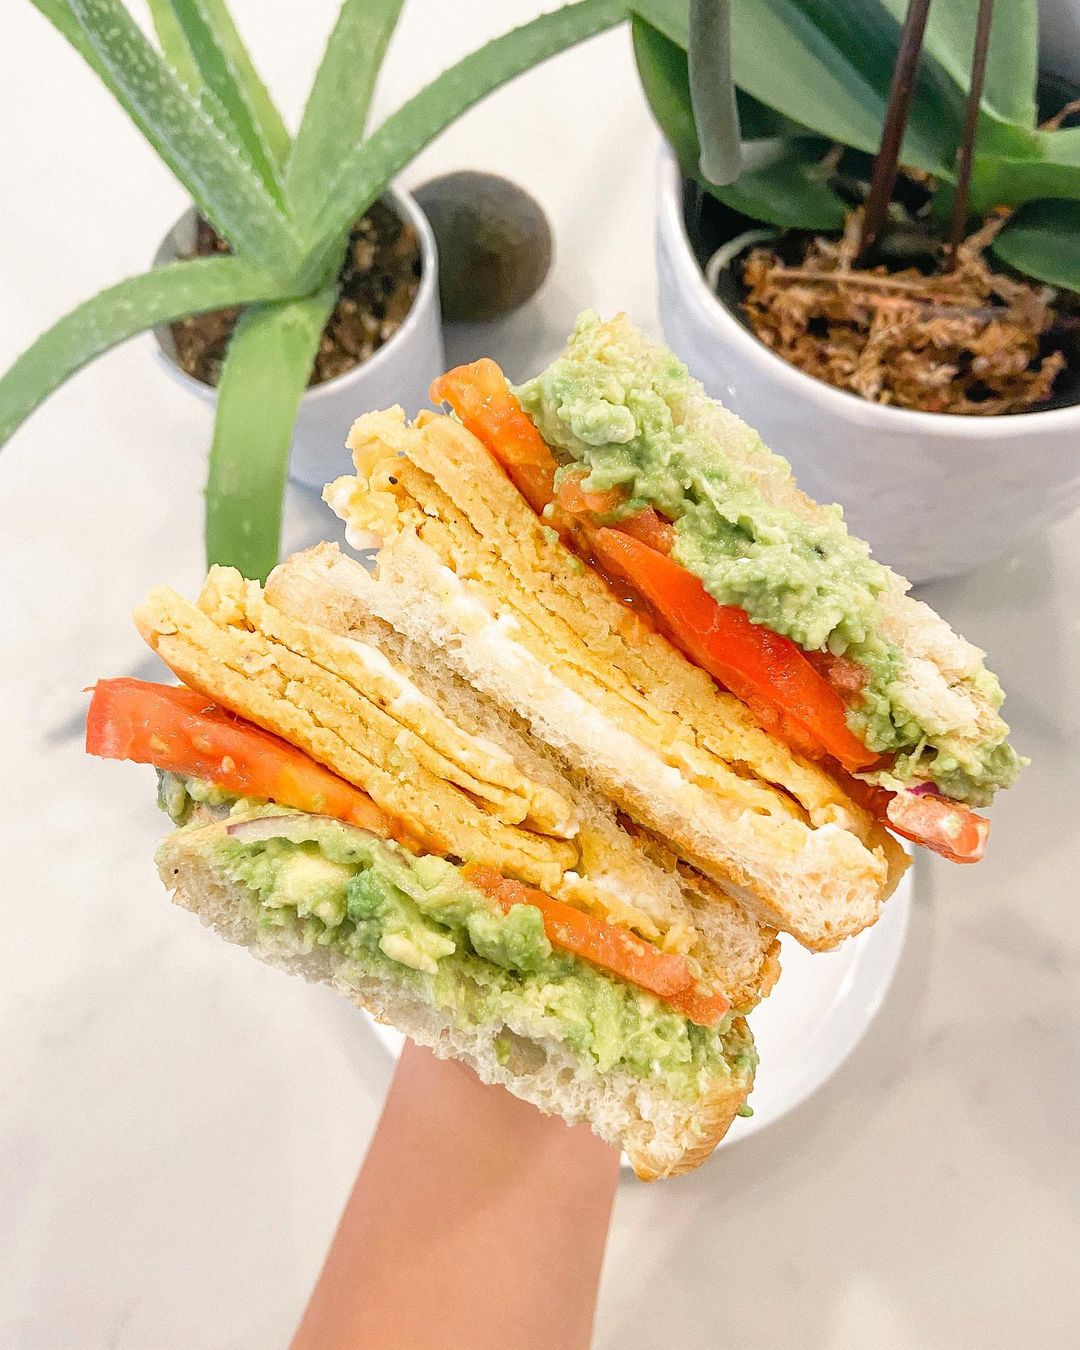 Vegan “Egg” Sandwich